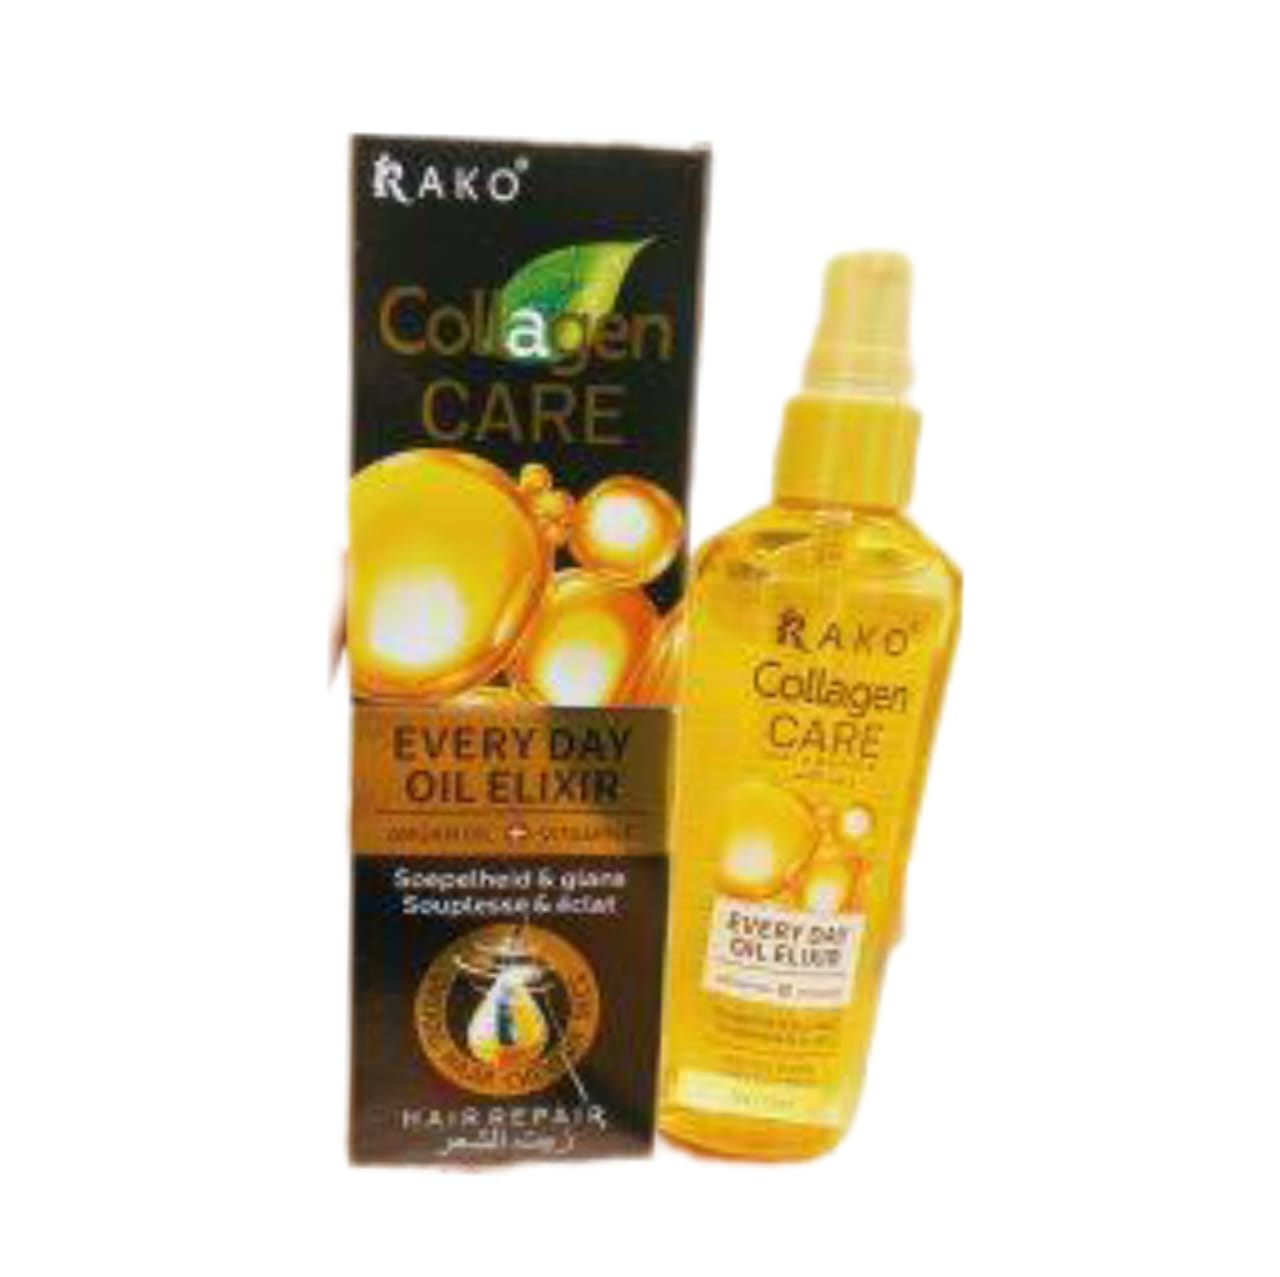 Rako Collagen Care Every Day Oil Elixir